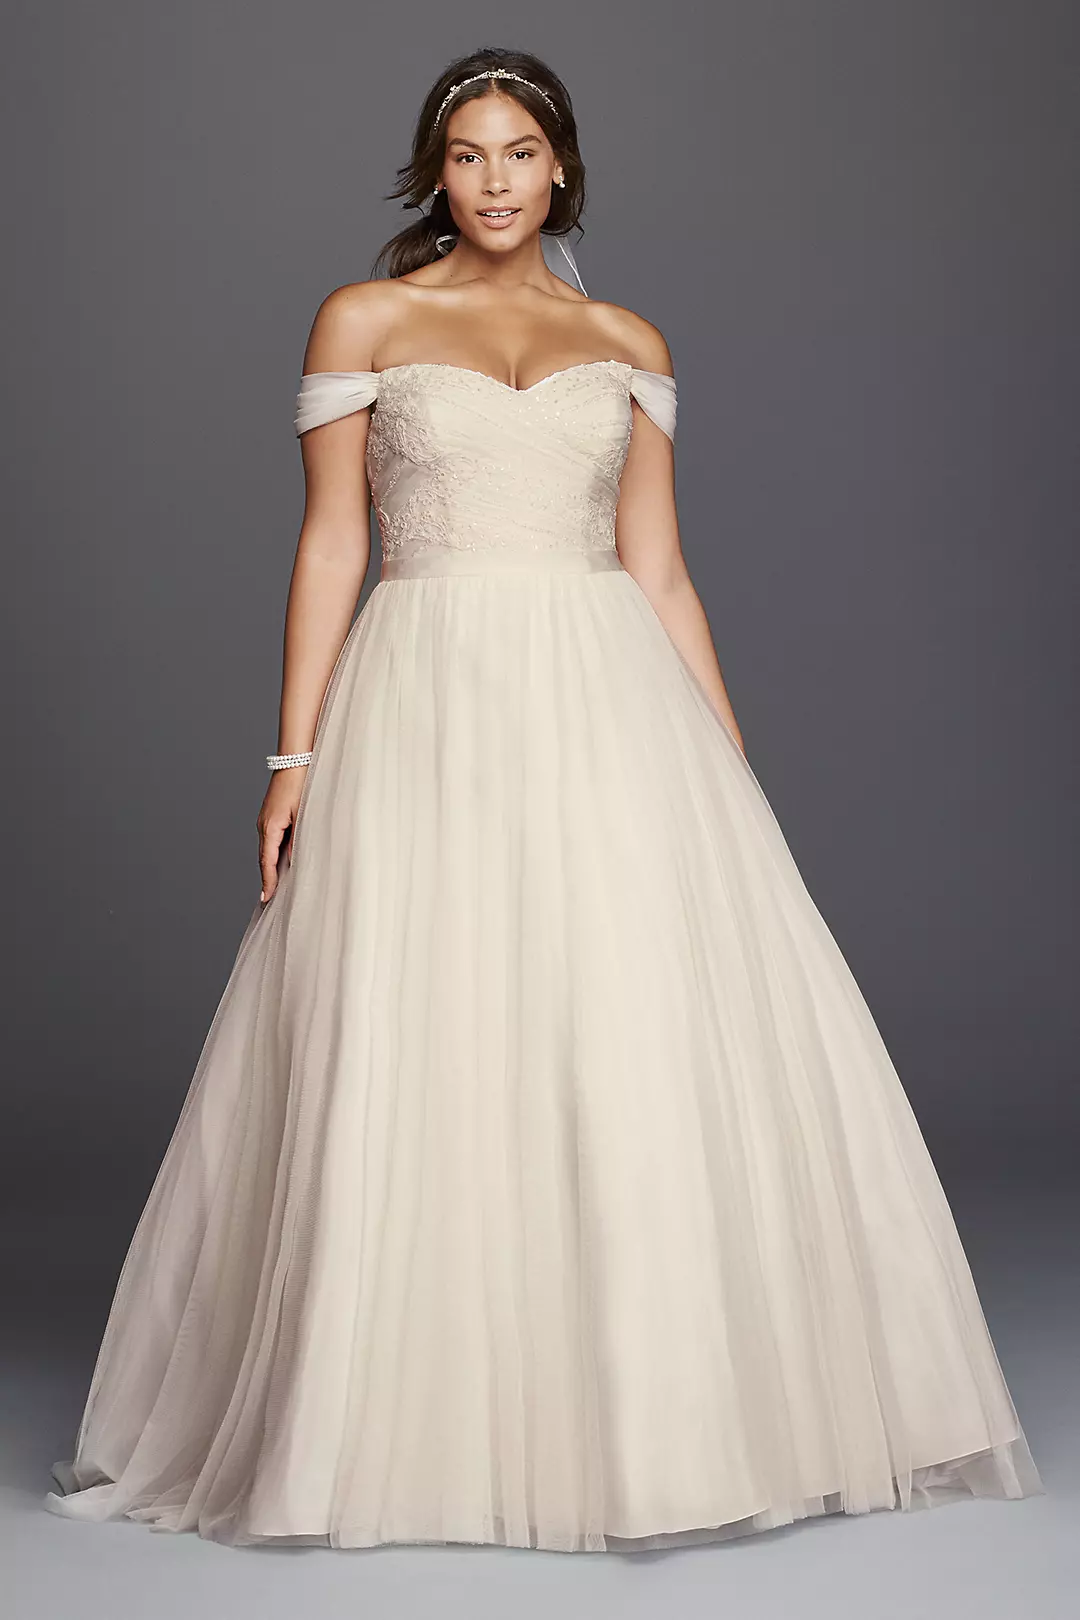 Tulle Beaded Lace Sweetheart Wedding Dress Image